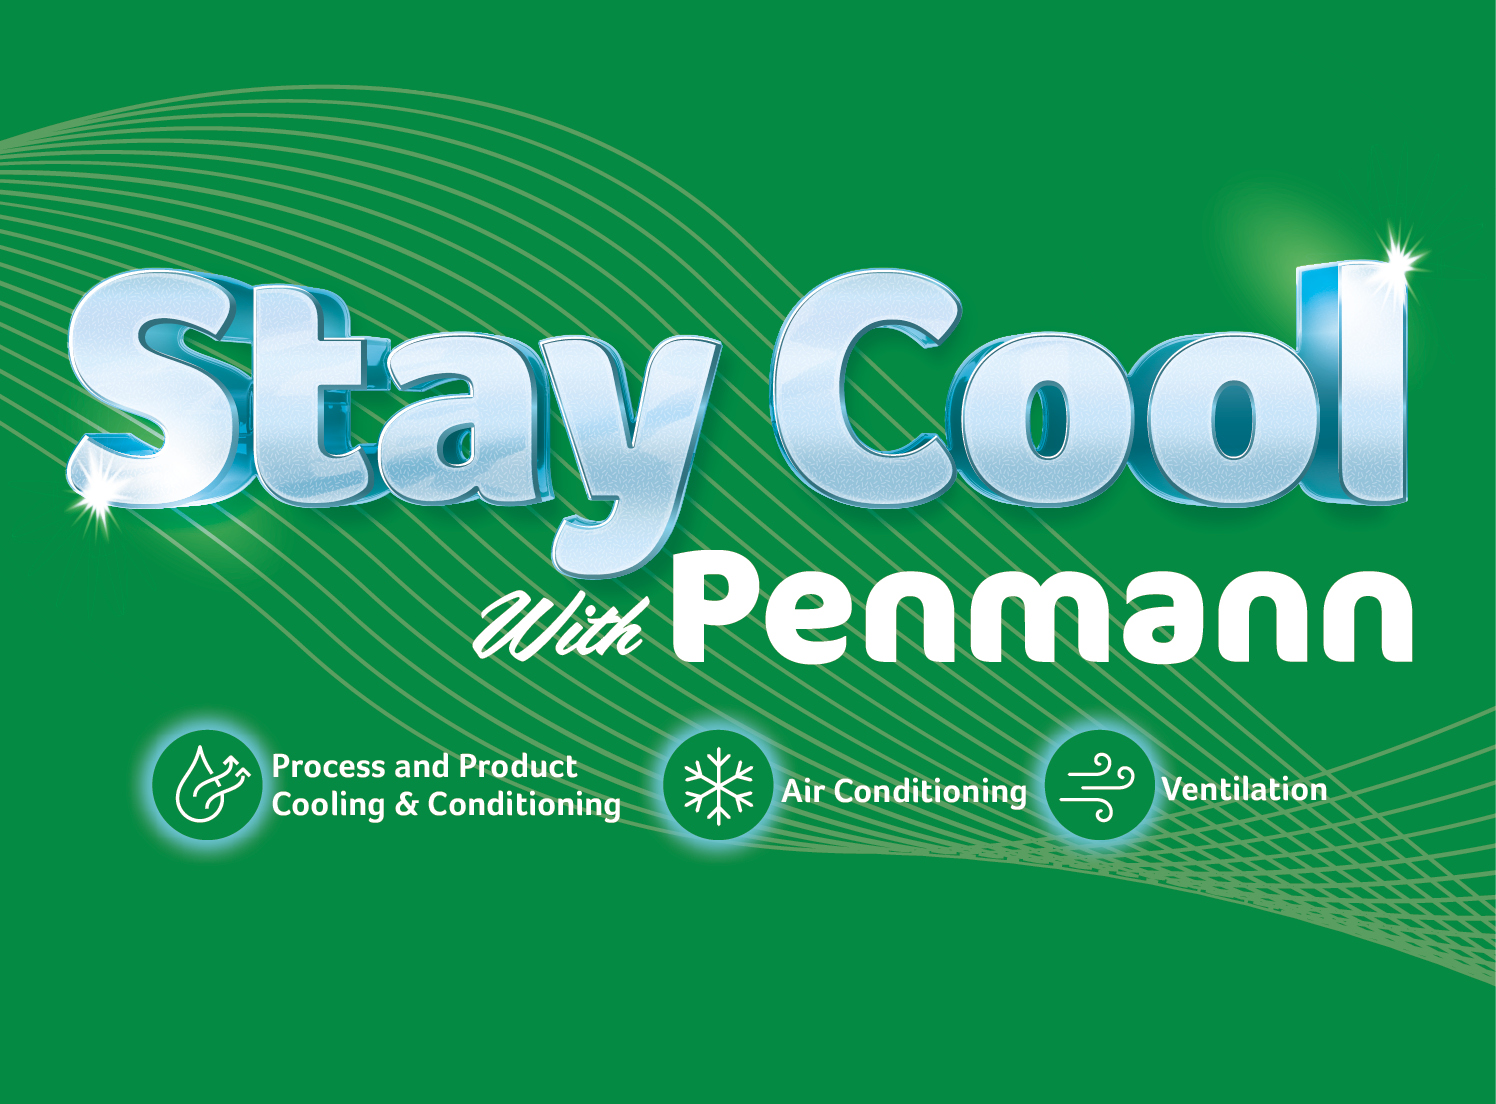 Stay Cool with Penmann - Penmann news